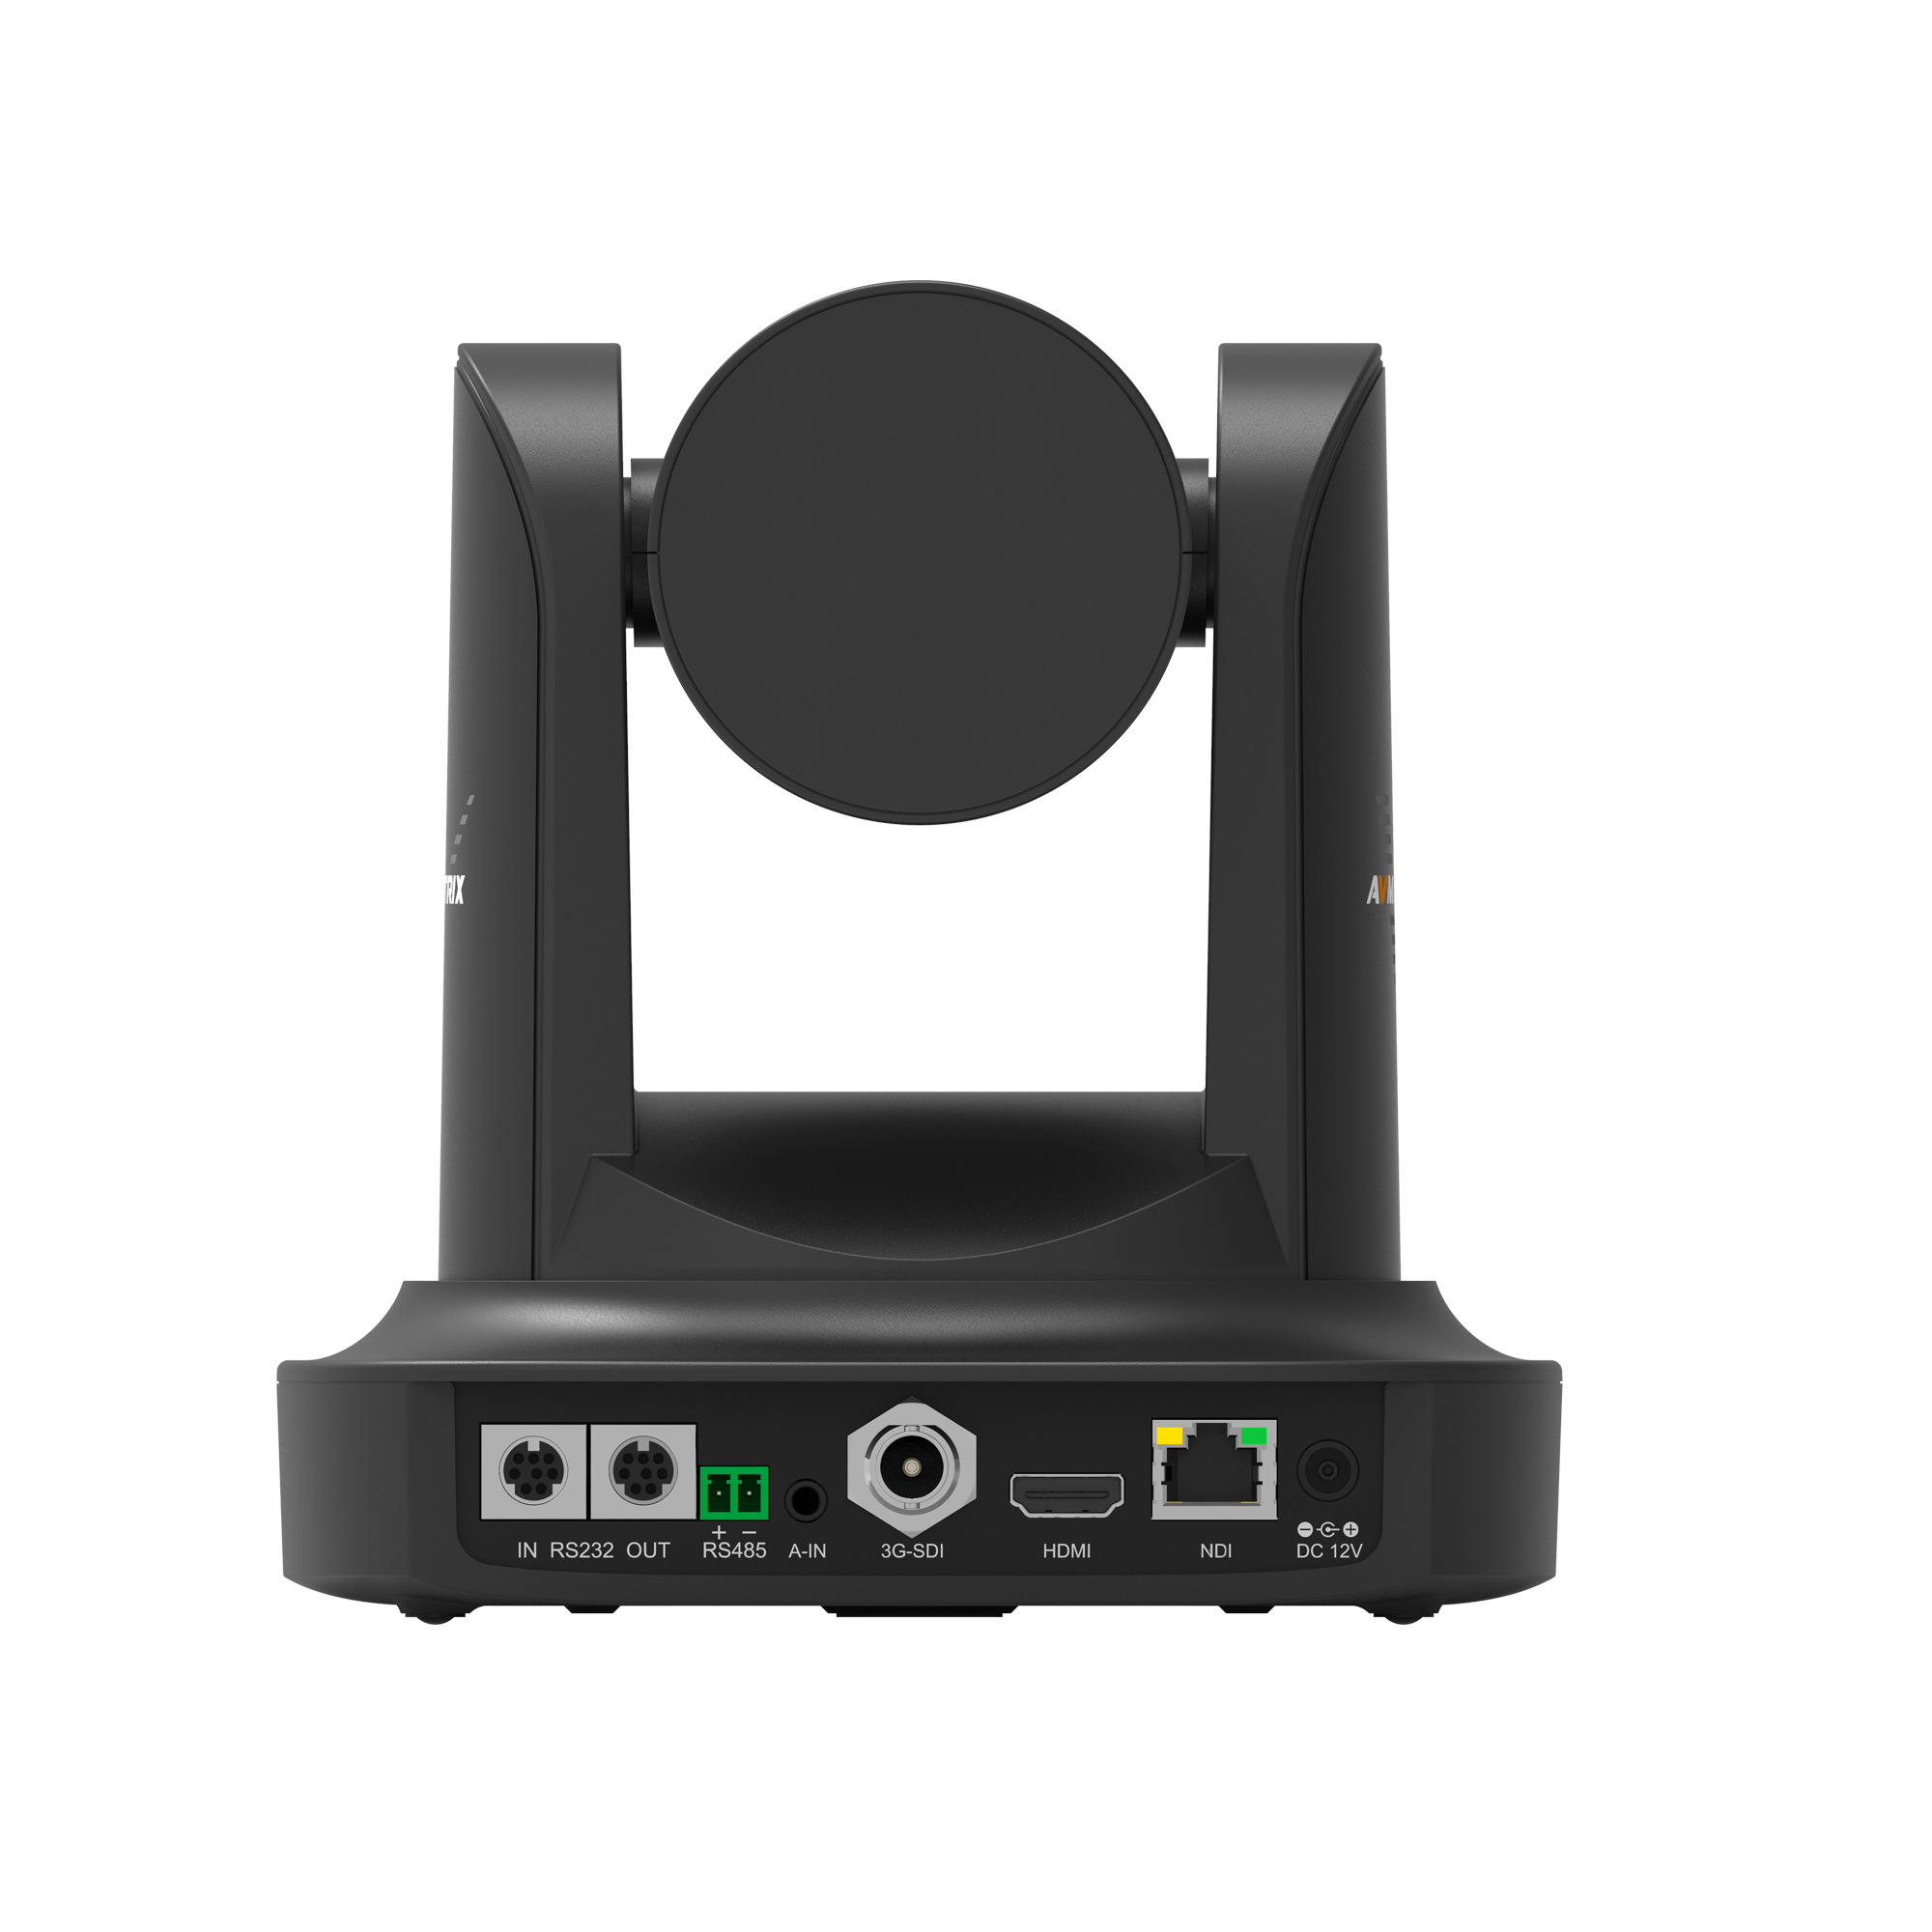 Видеокамера AVMATRIX PTZ1271-20X-NDI выход SDI/HDMI